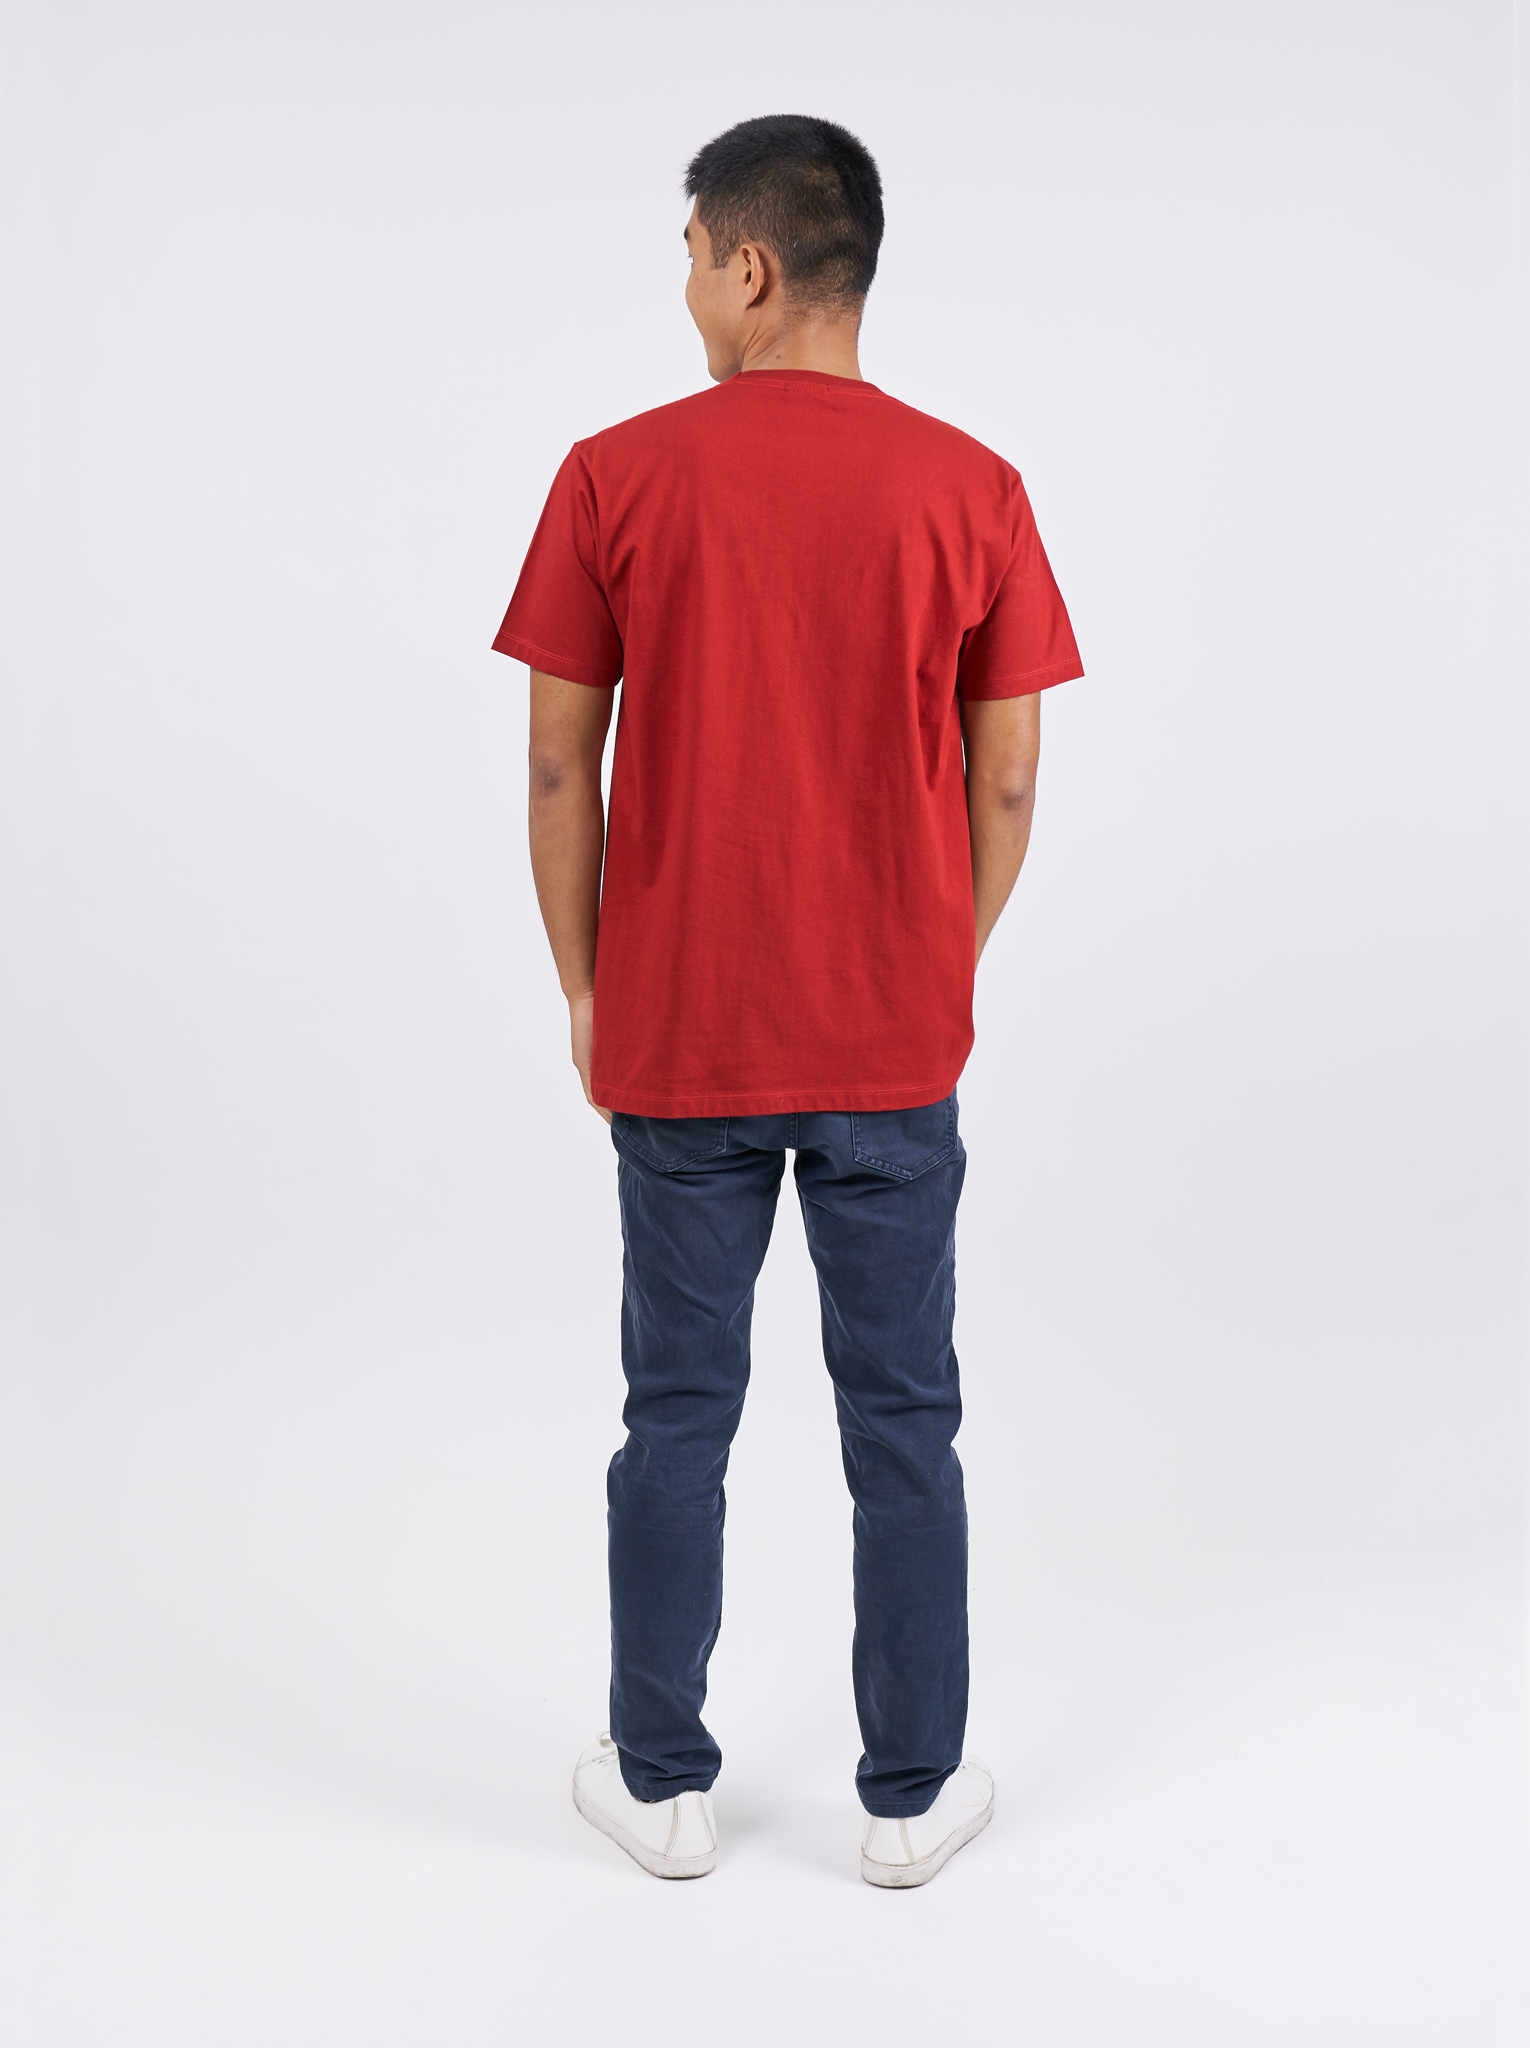 T-Shirt เสื้อยืด (Cherry Red, สีแดงเข้ม)(Unisex)